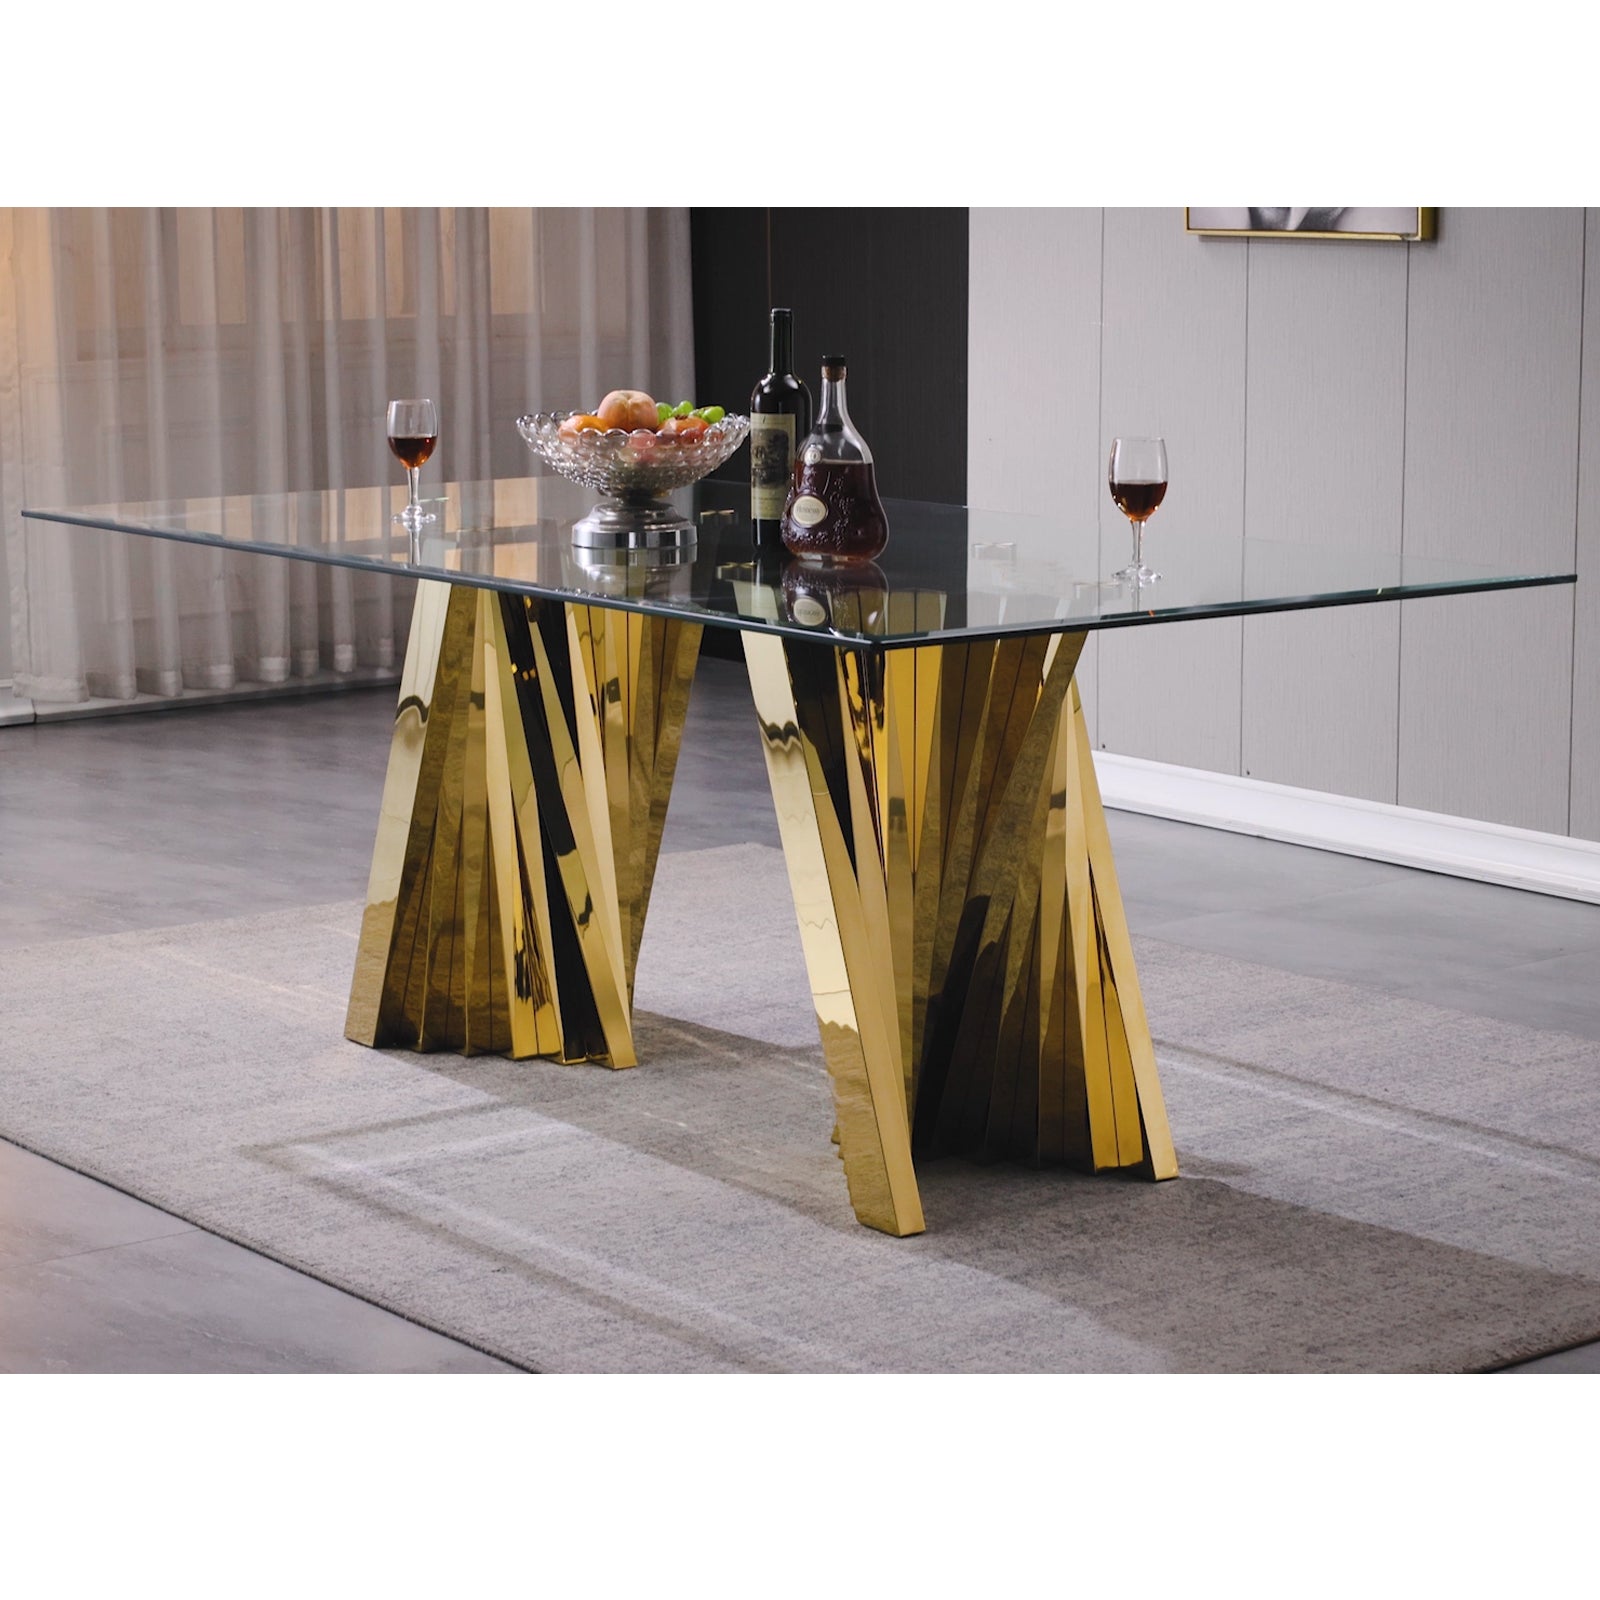 666-Set | AUZ Glass Dining room Sets for 6